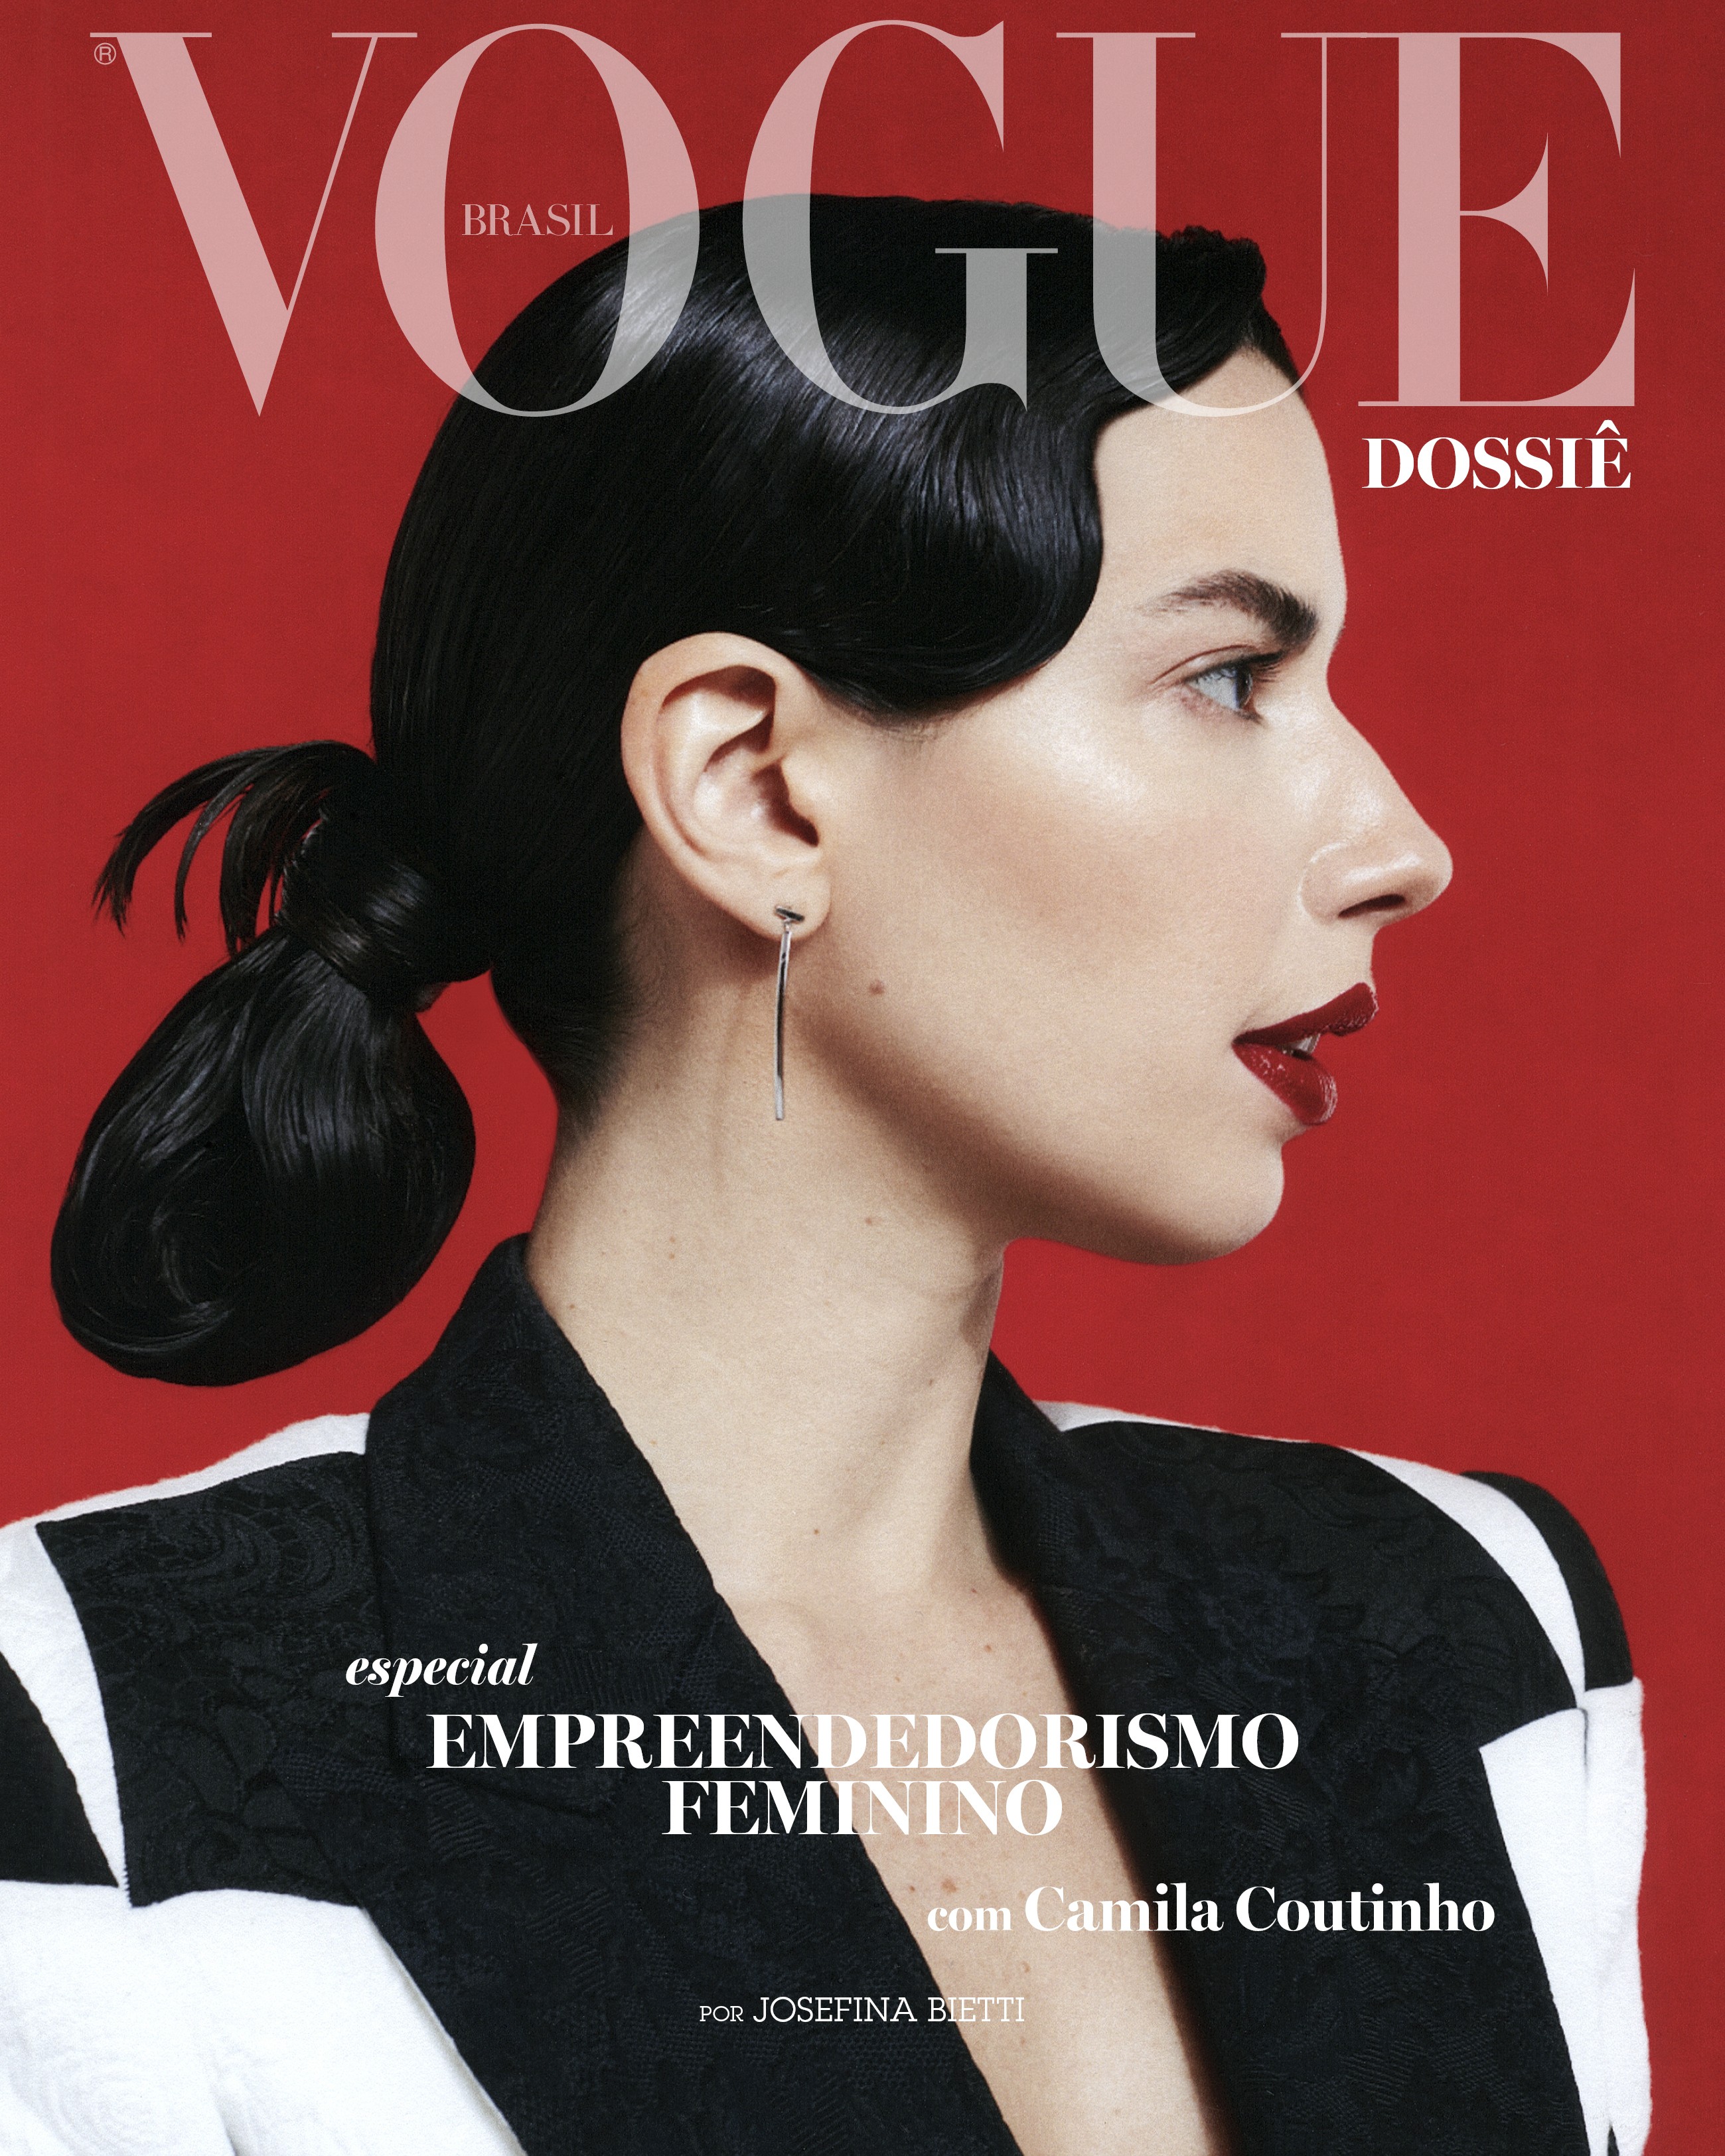 Vogue Dossiê: Empreendedorismo (Foto: Vogue Brasil)